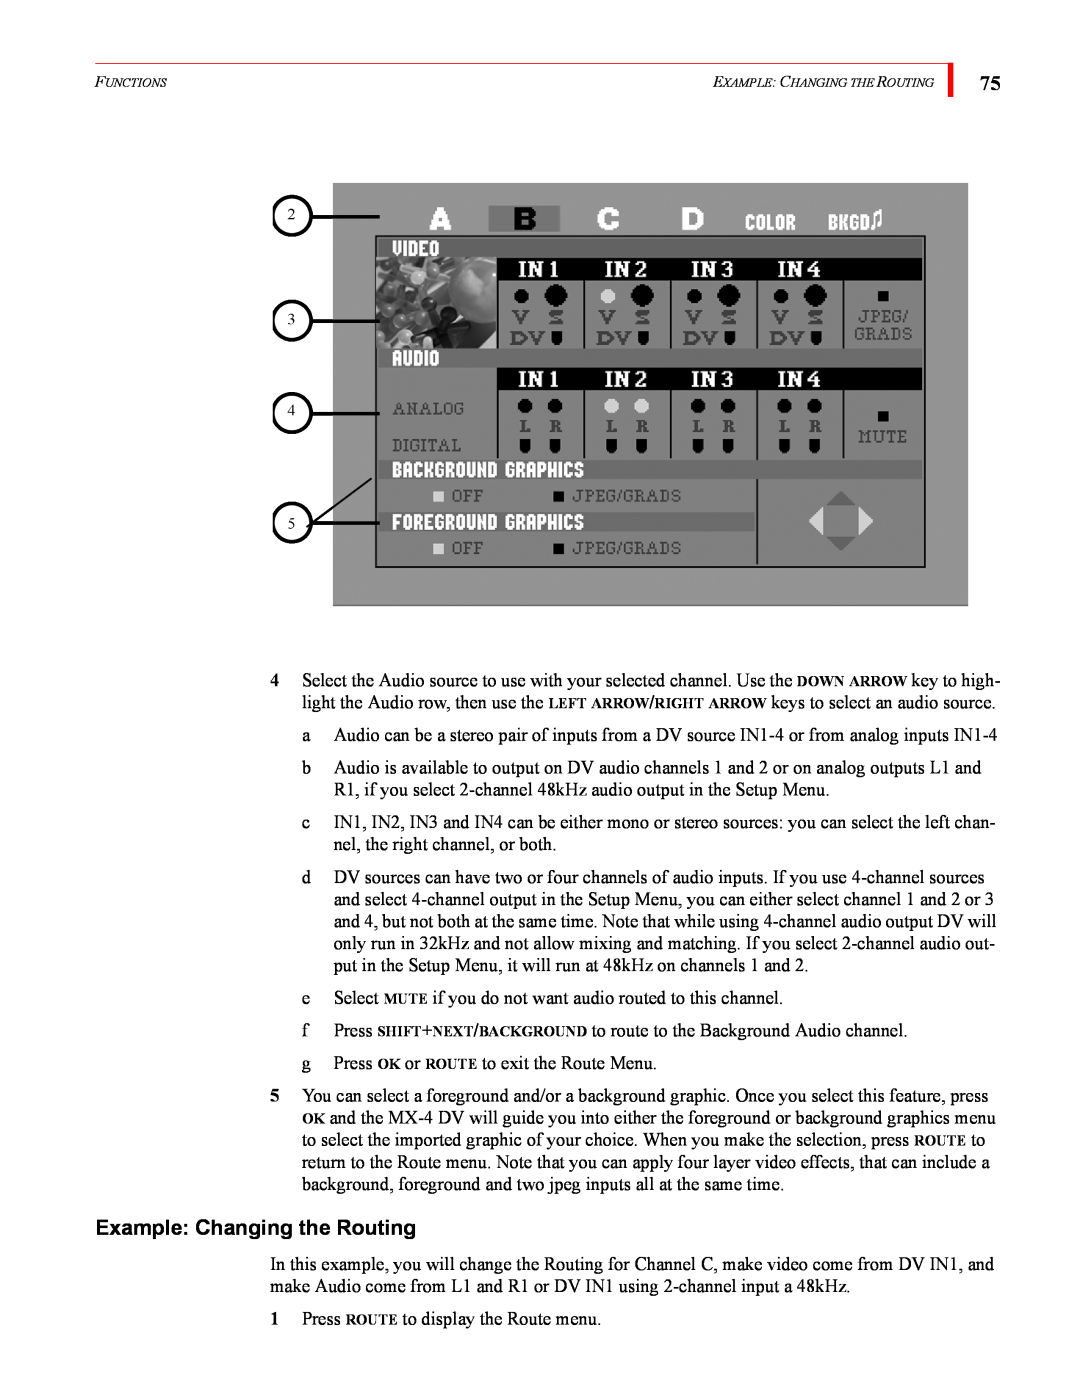 FOCUS Enhancements MX-4DV manual Example Changing the Routing, Example Changing The Routing 